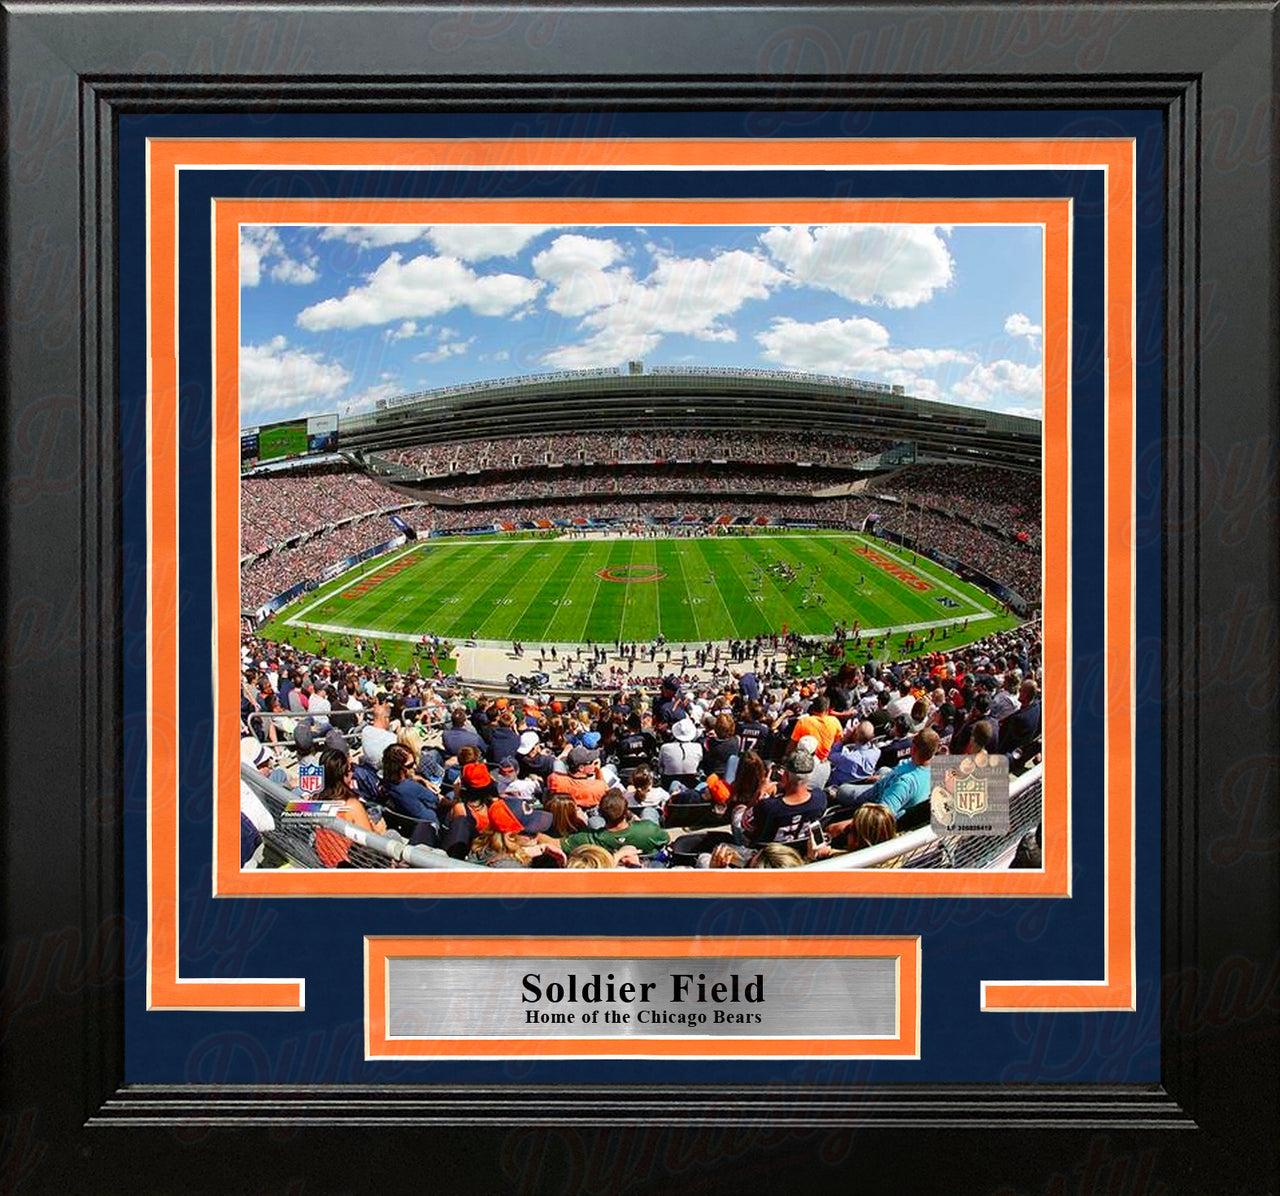 Chicago Bears Soldier Field 8" x 10" Framed Football Stadium Photo - Dynasty Sports & Framing 